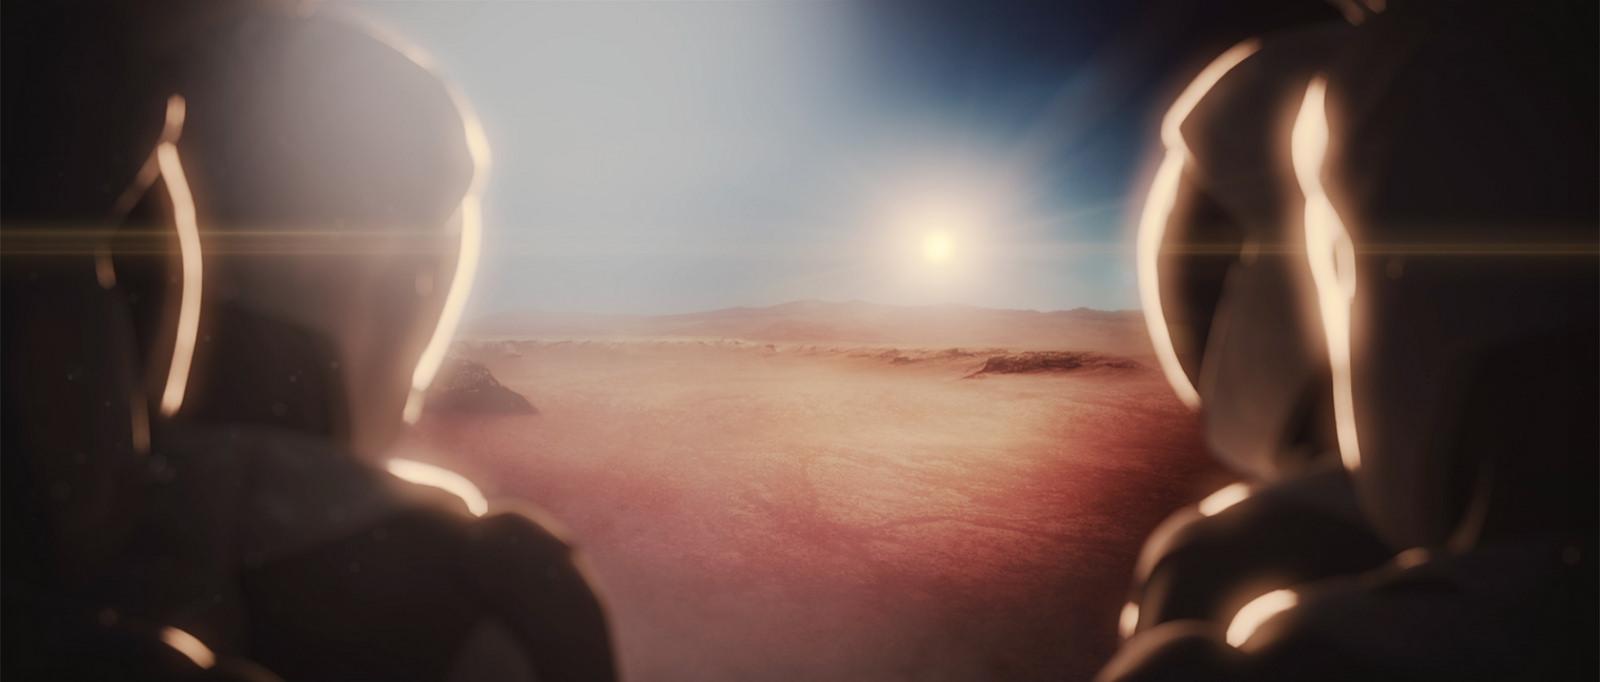 Elon Musk's SpaceX Mars colonization plan wallpaper